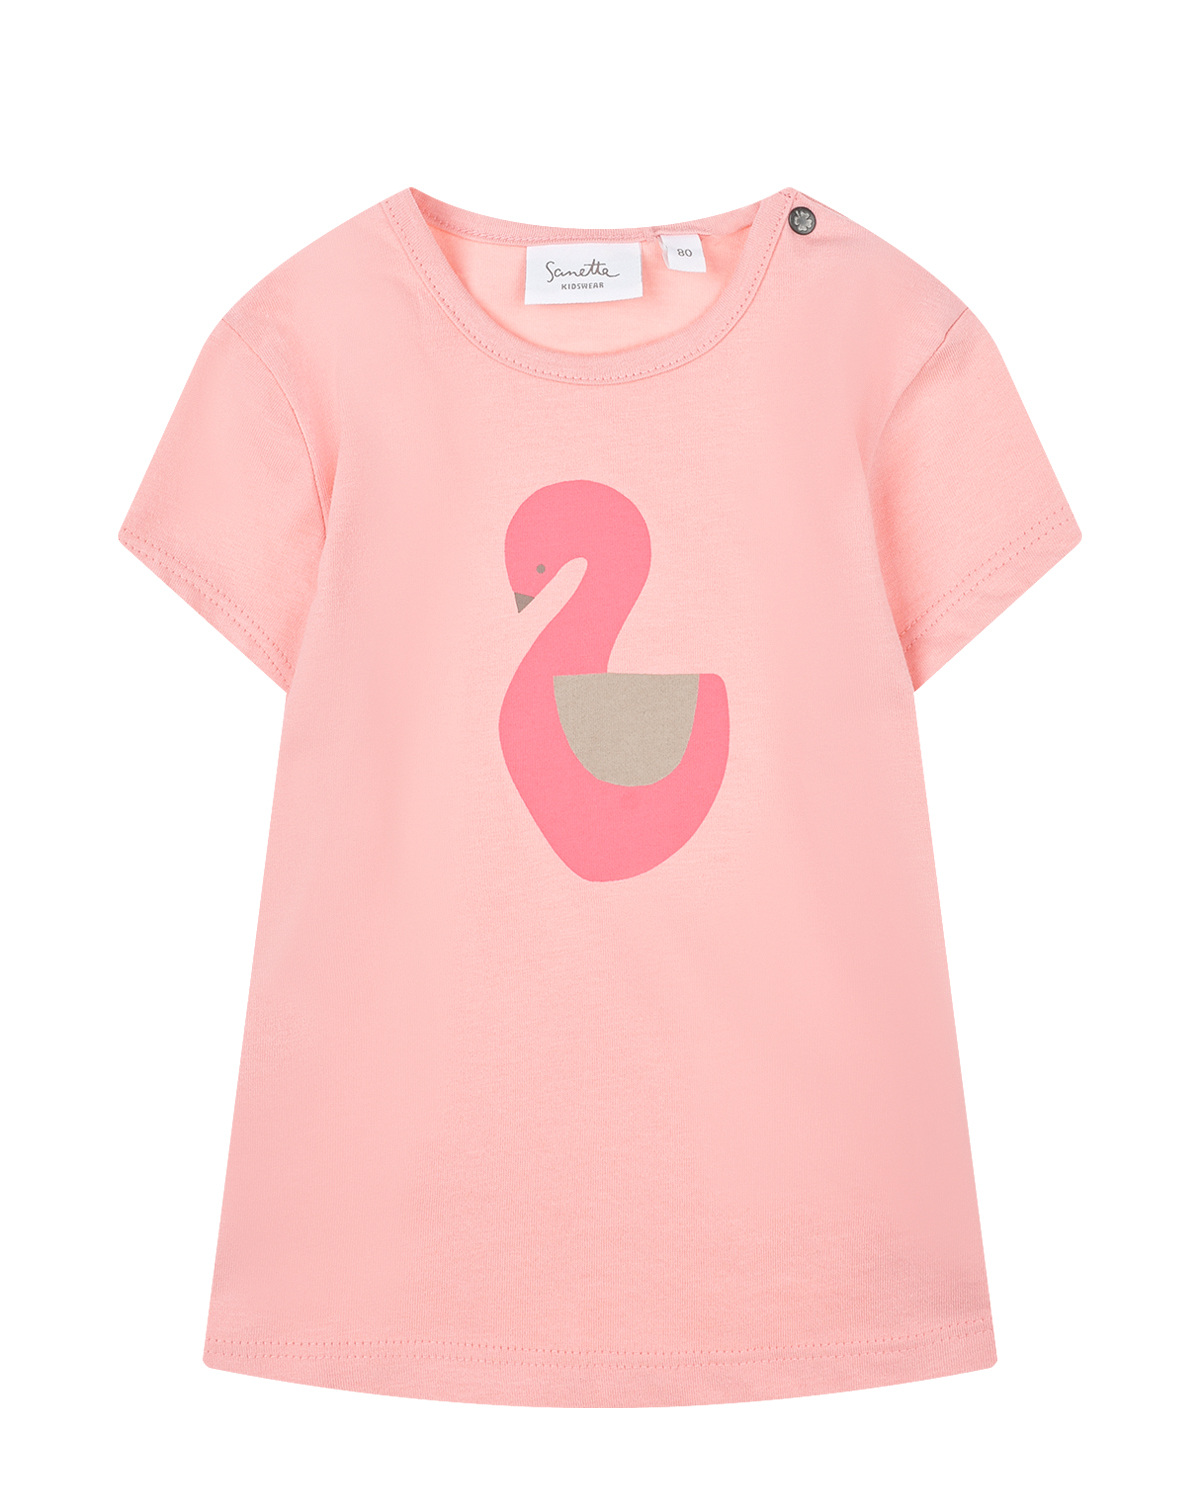 Розовая футболка с принтом "лебедь" Sanetta Kidswear, размер 74, цвет розовый - фото 1